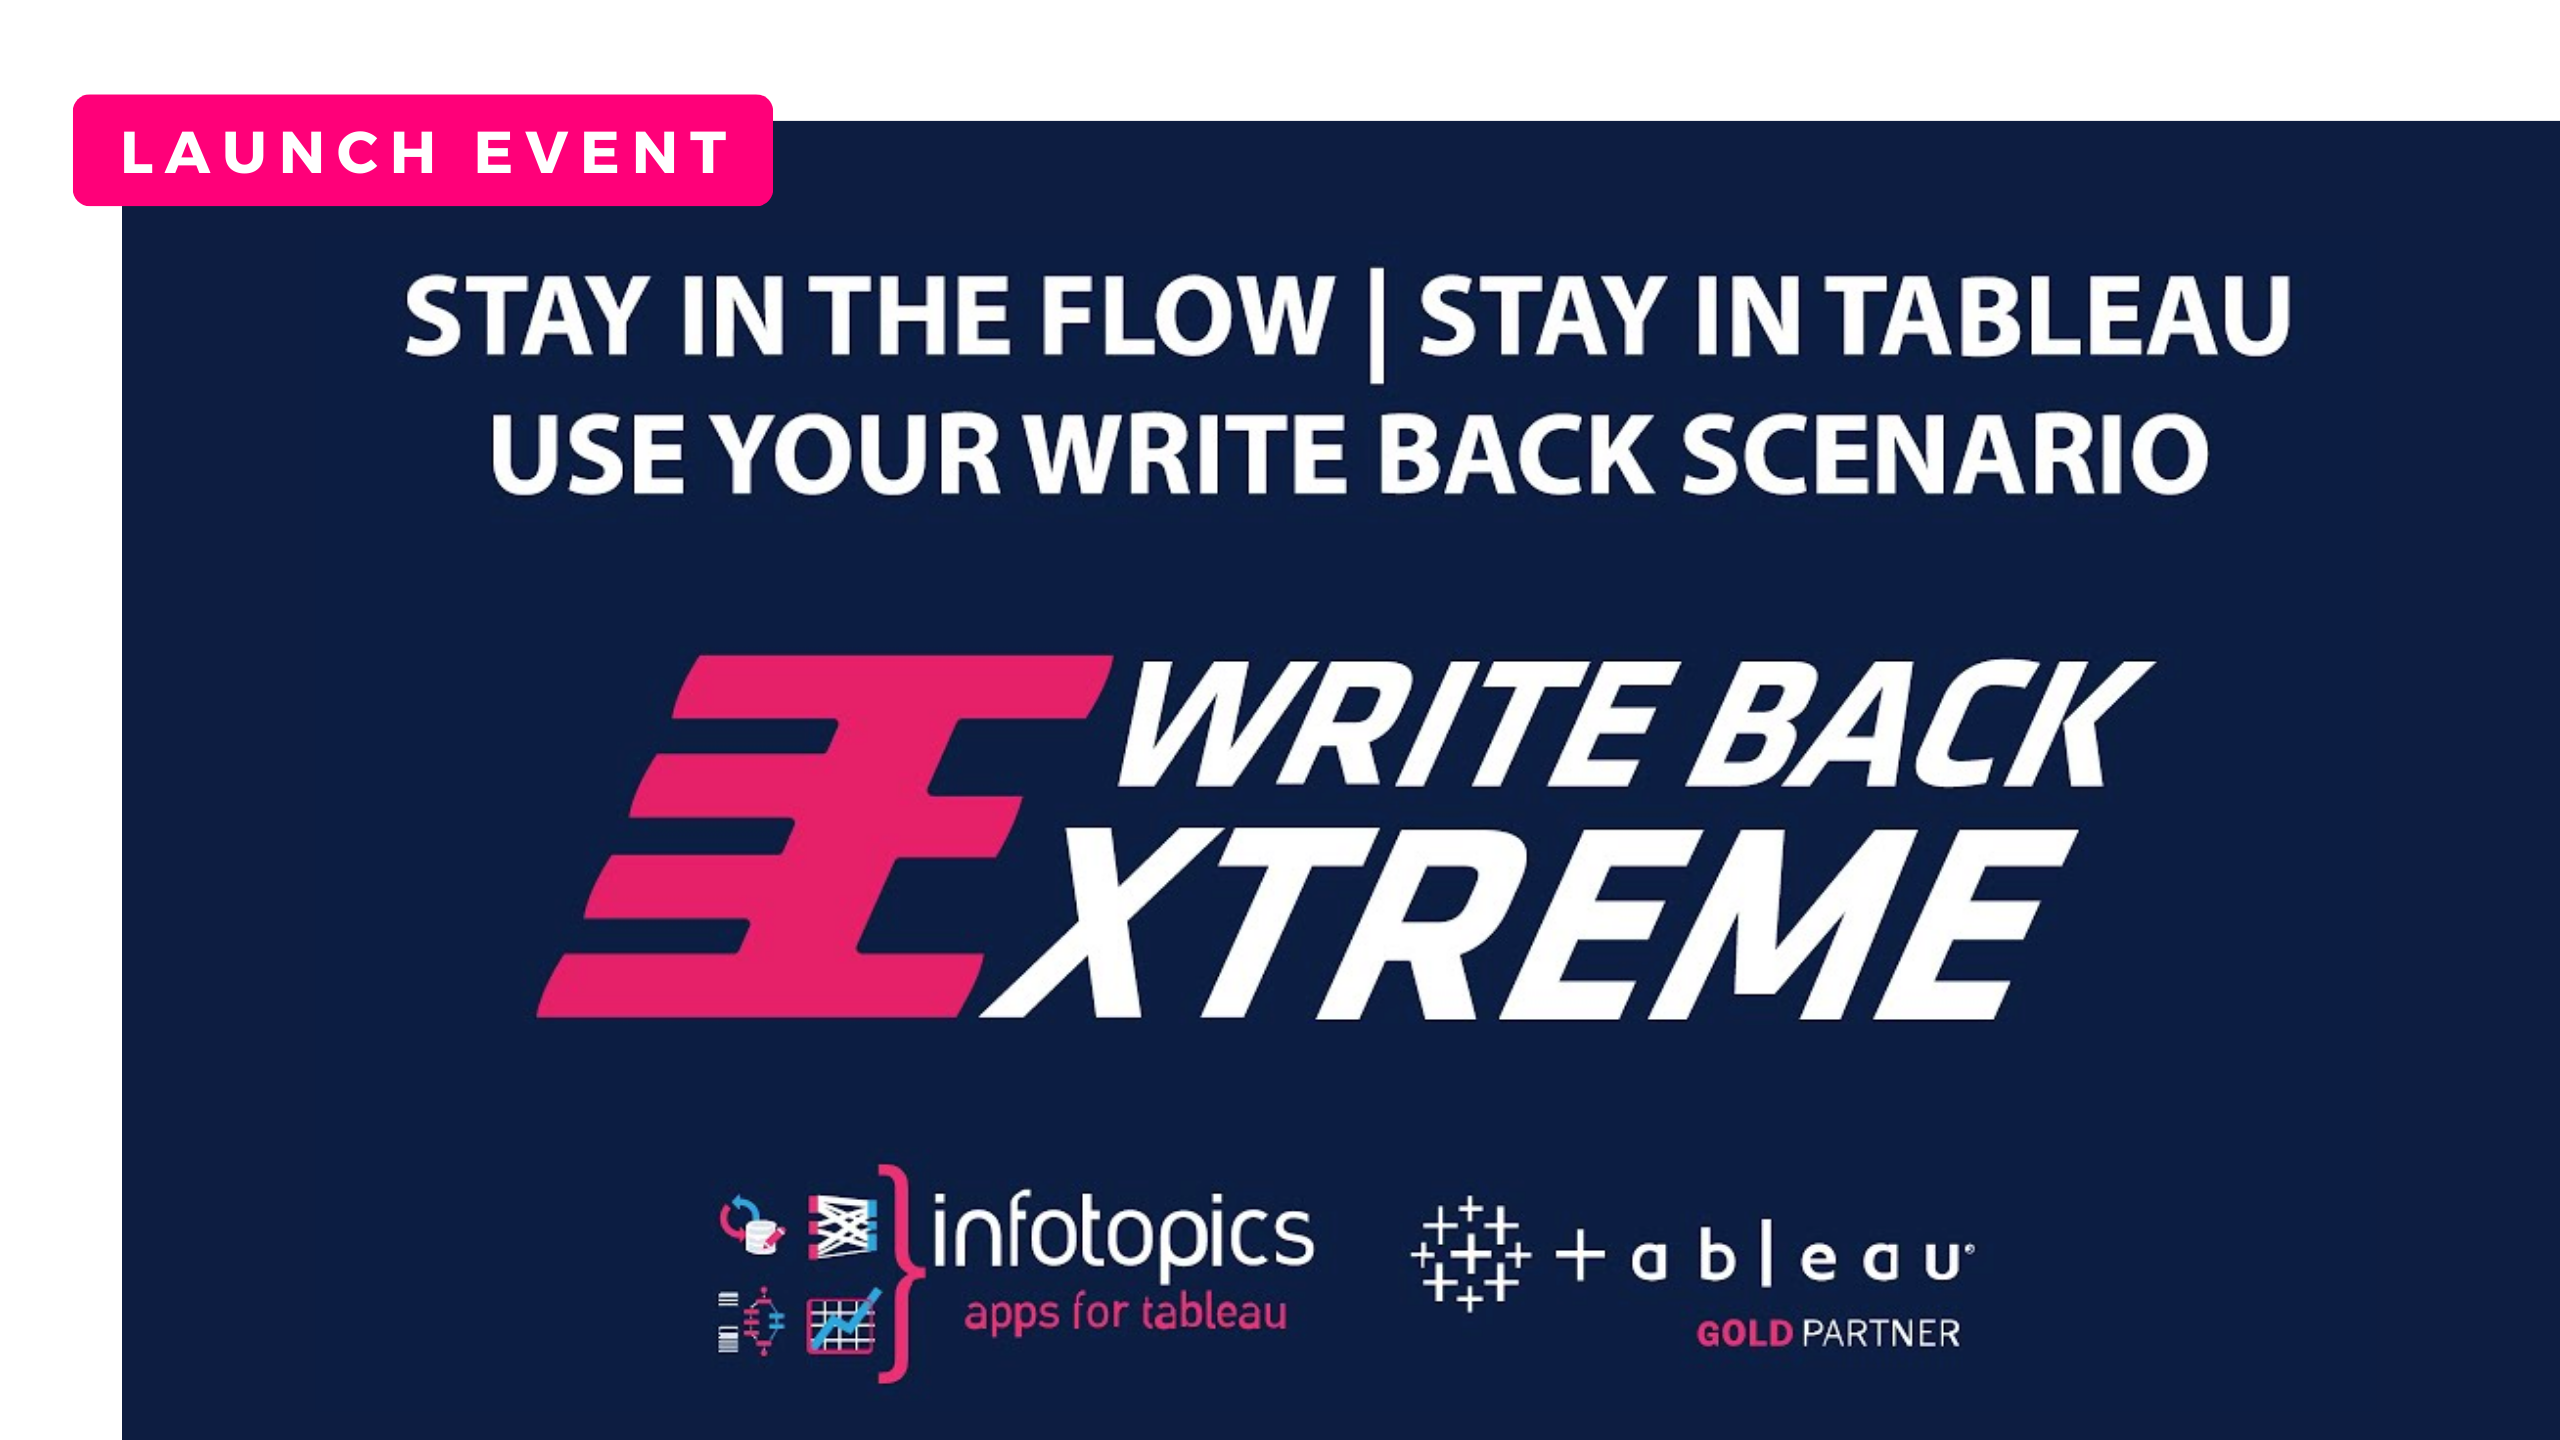 Launch event WriteBackExtreme